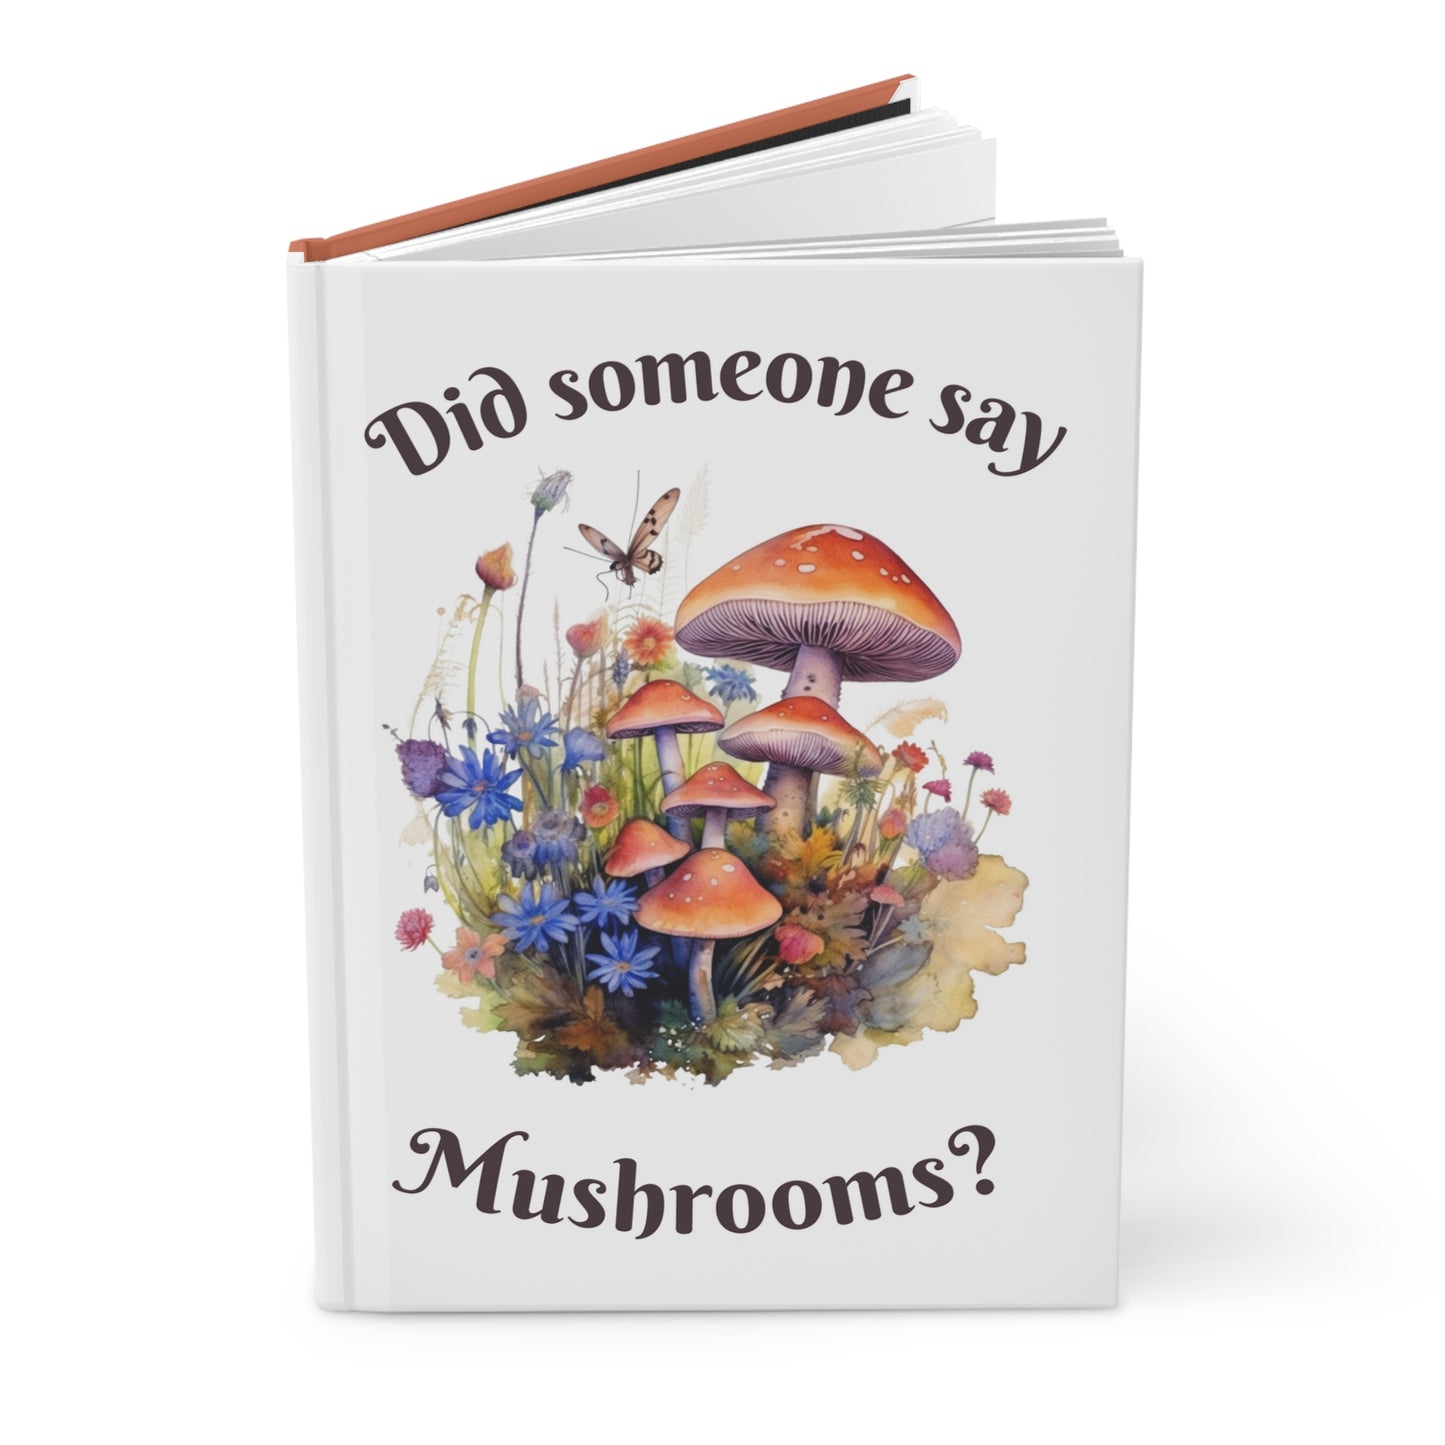 Mushroom Magic Hardcover Journal Notebook - Mindfulness, Gratitude, Daily Self-Care, Wellness Diary, Size 5.75"x7.5"